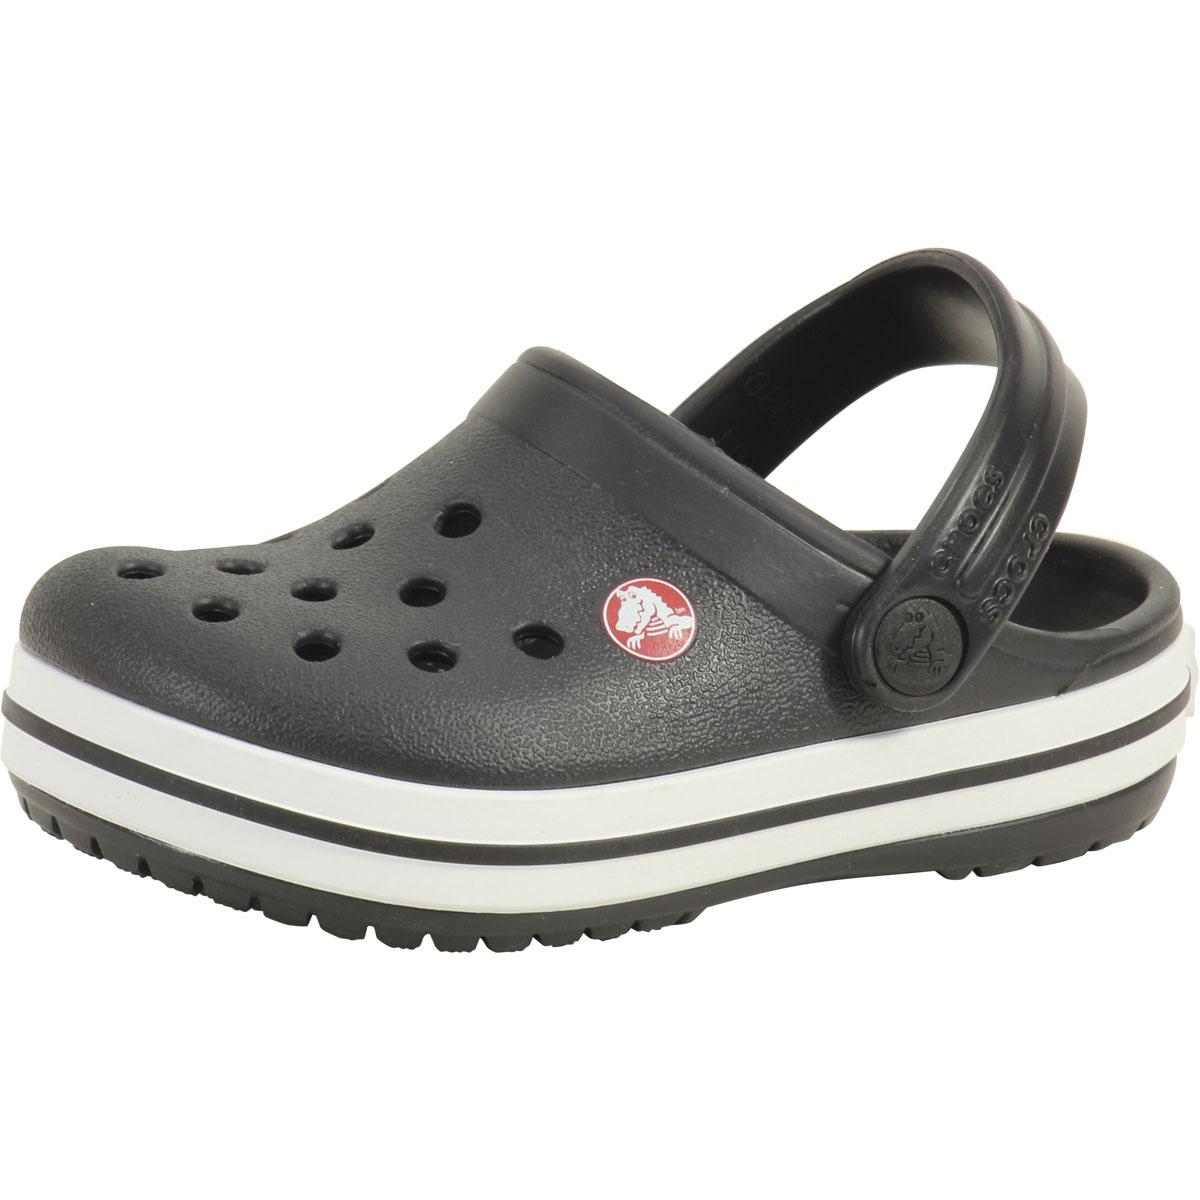 Crocs Toddler/Little Boy's Crocband Clogs Sandals Shoes - Black - 11 M US Little Kid -  Kids' Crocband Clog; 204537